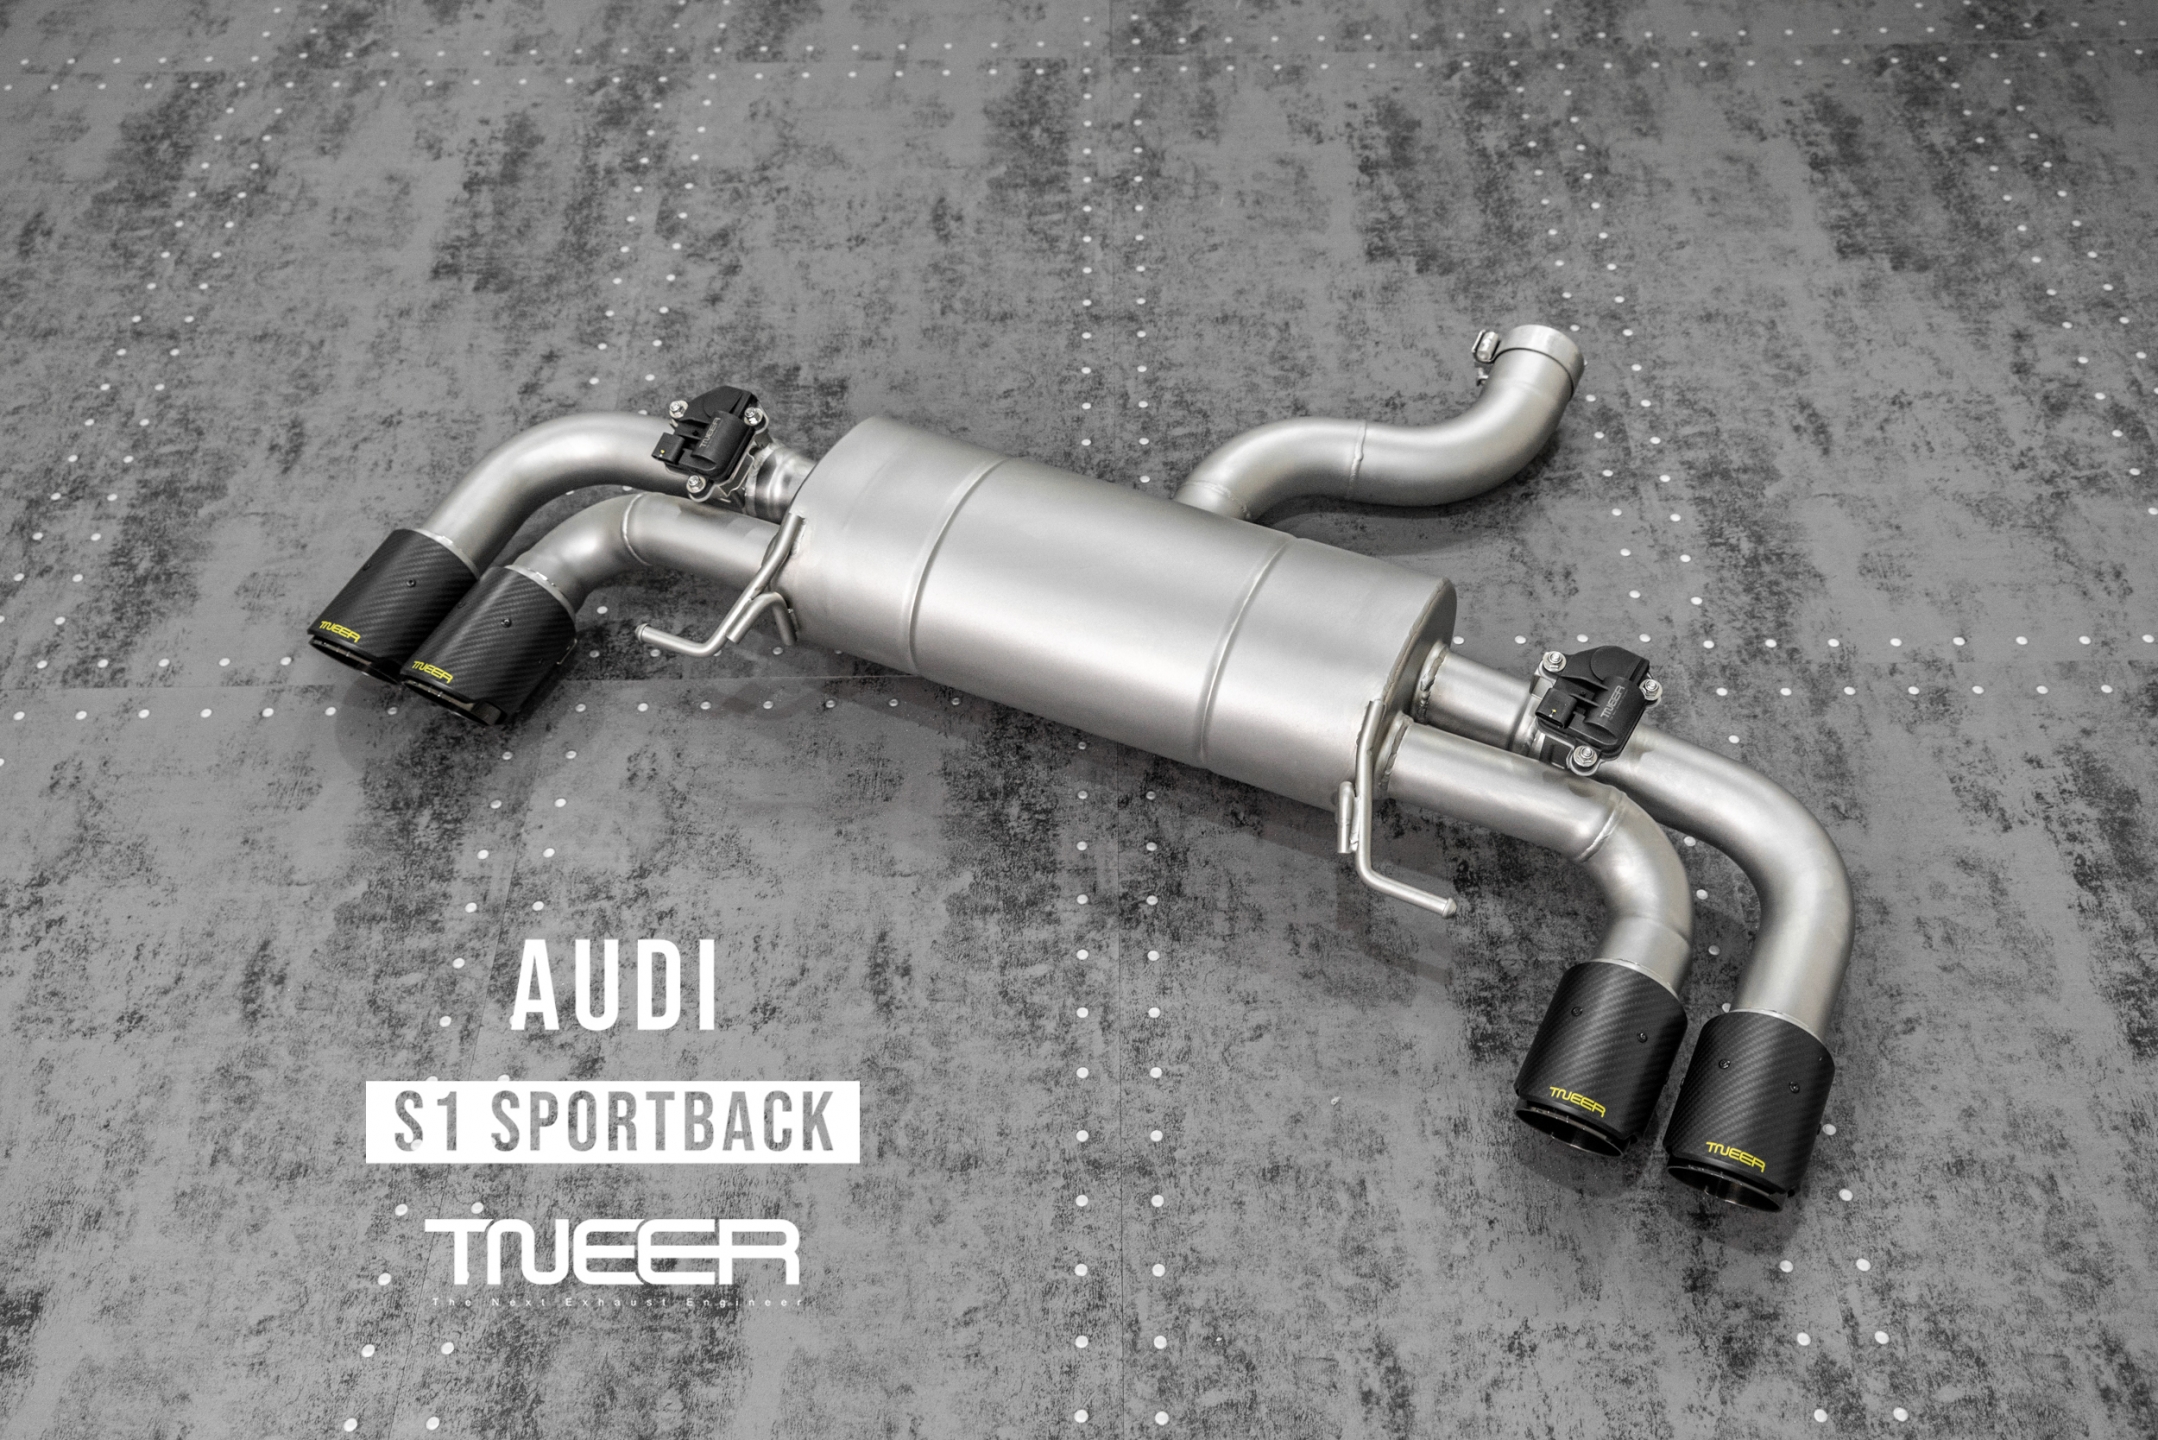 Audi S1 (8X) 2.0T TNEER Exhaust System